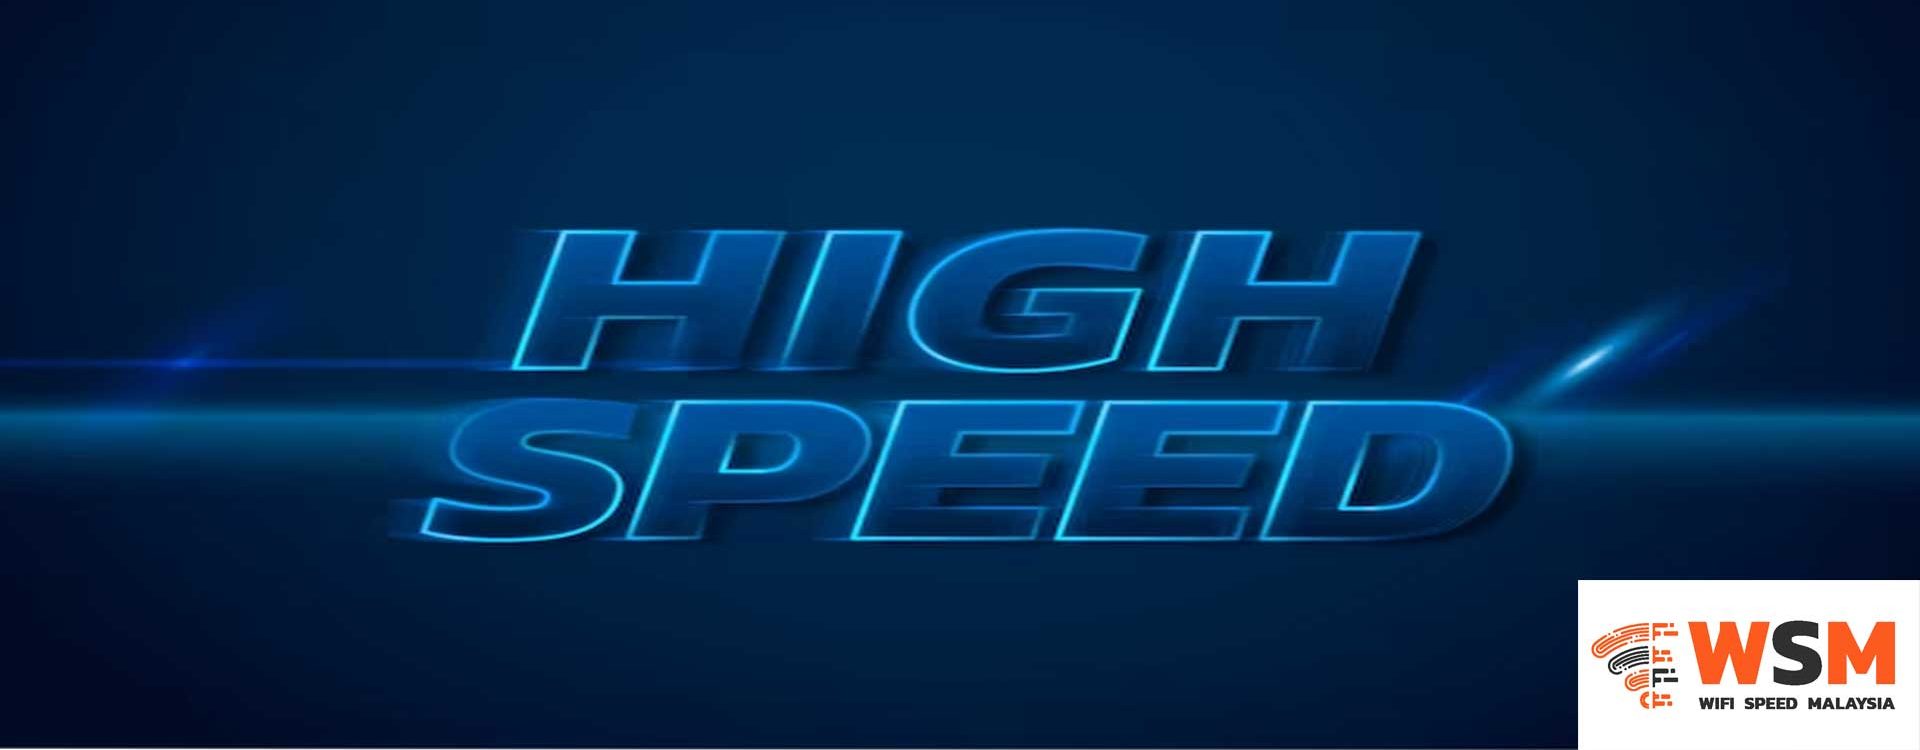 high-wifi-speed